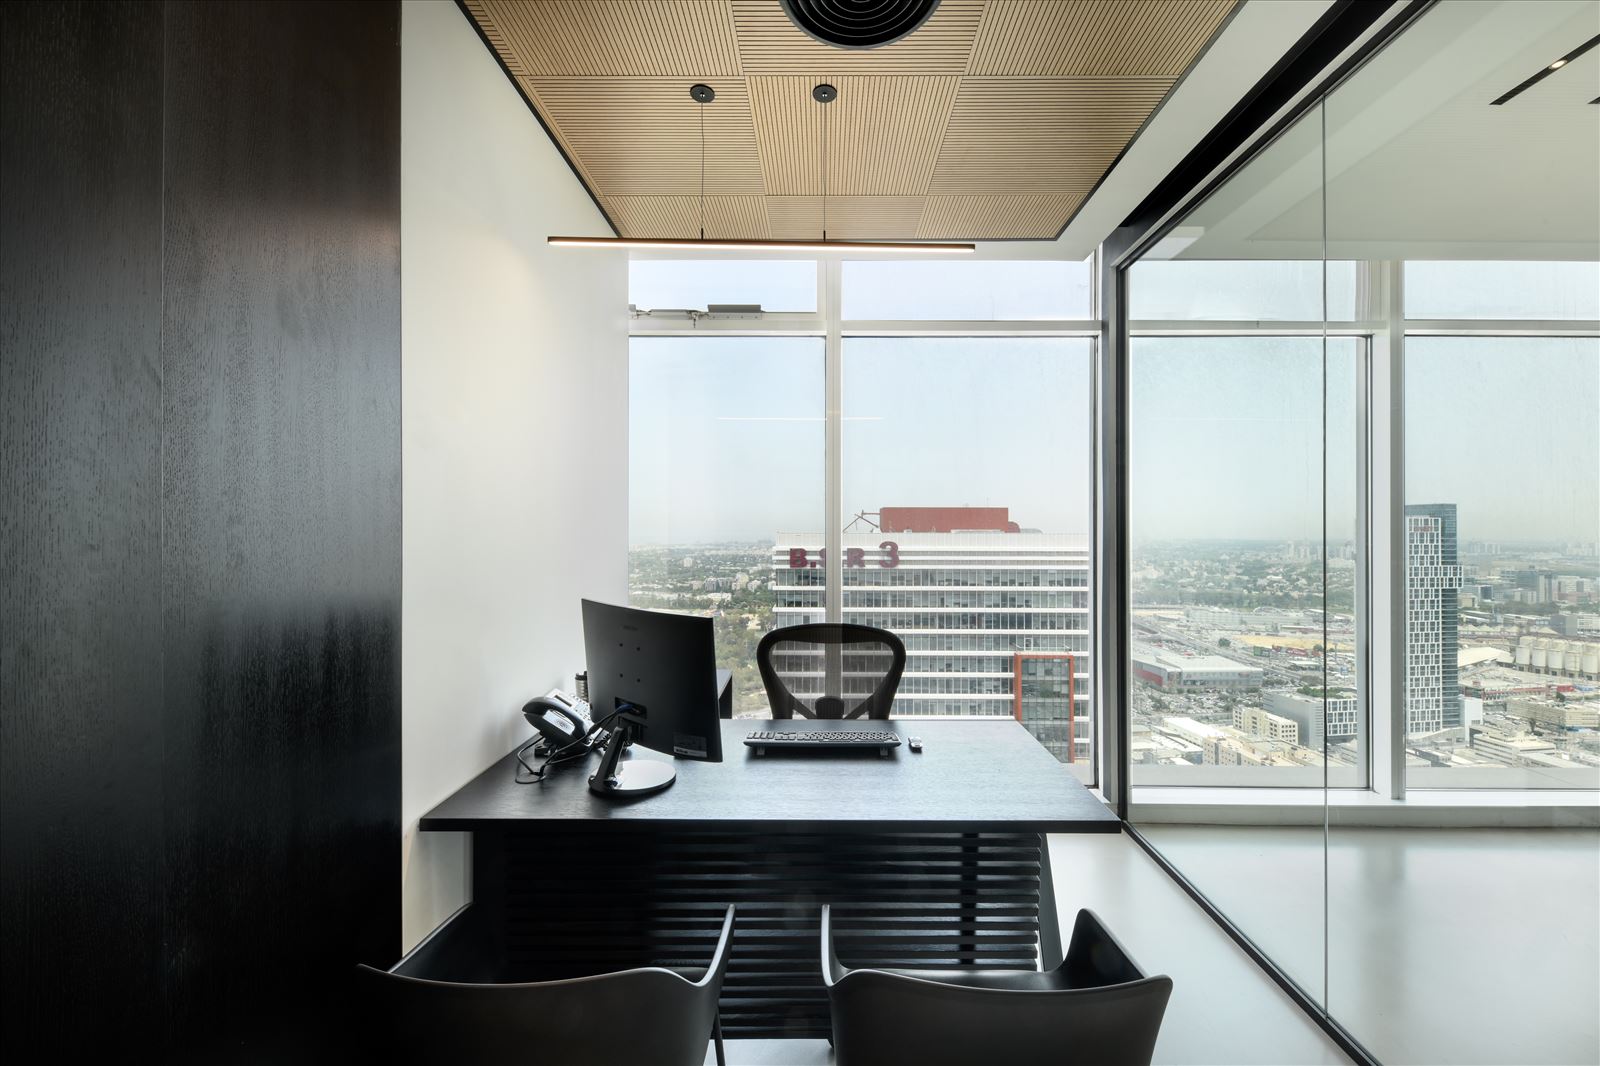 Divident office חדר המשרד מואר בגוף תאורה בעיצובו של קמחי תאורה